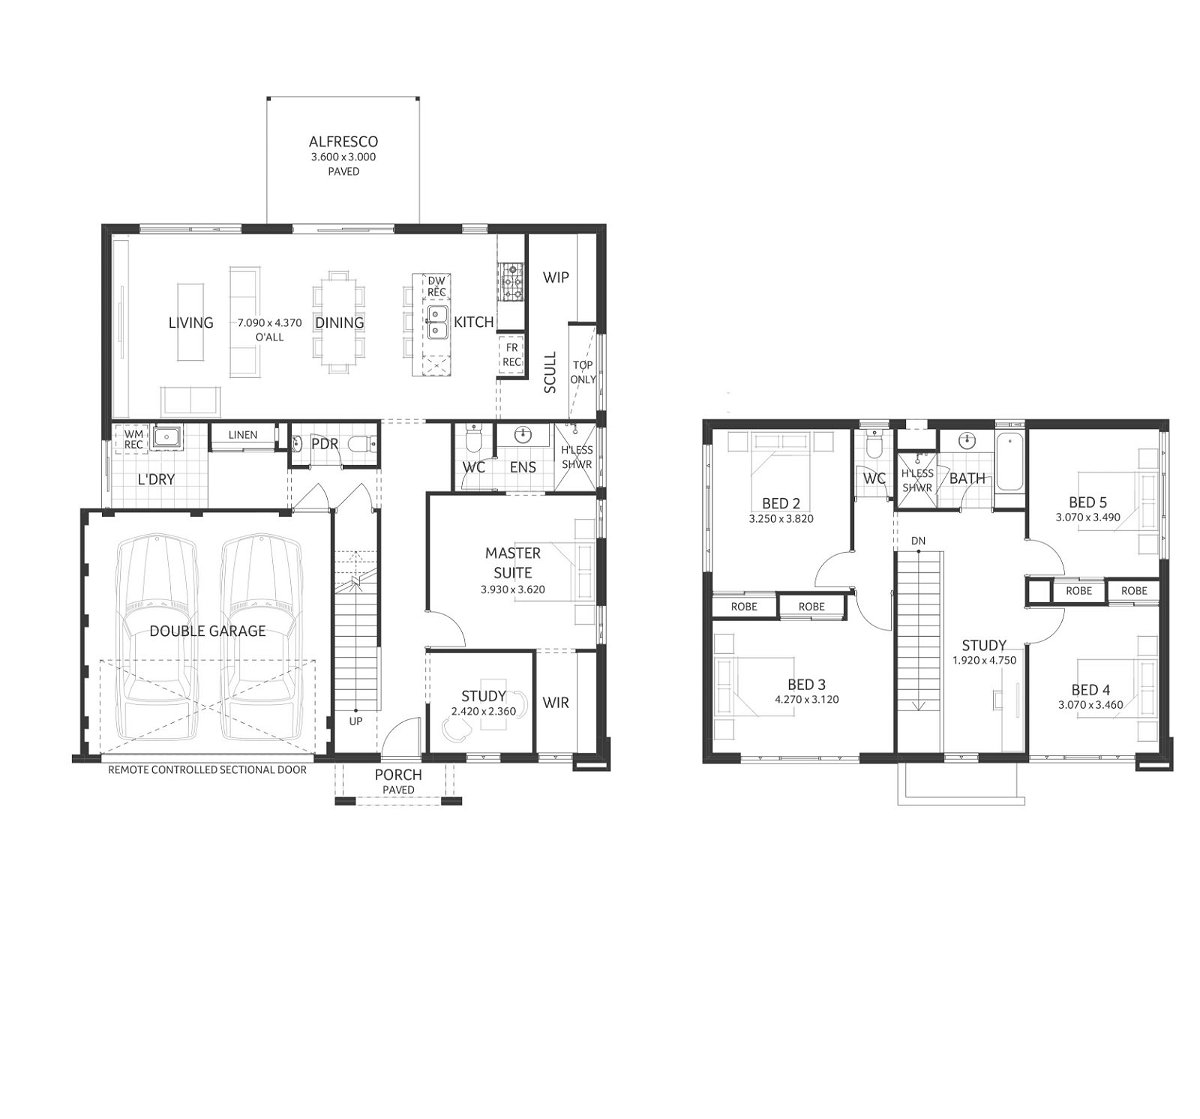 Plunkett Homes - Lakehouse | Lifestyle - Floorplan - Lakehouse Lifestyle Website Floorplan